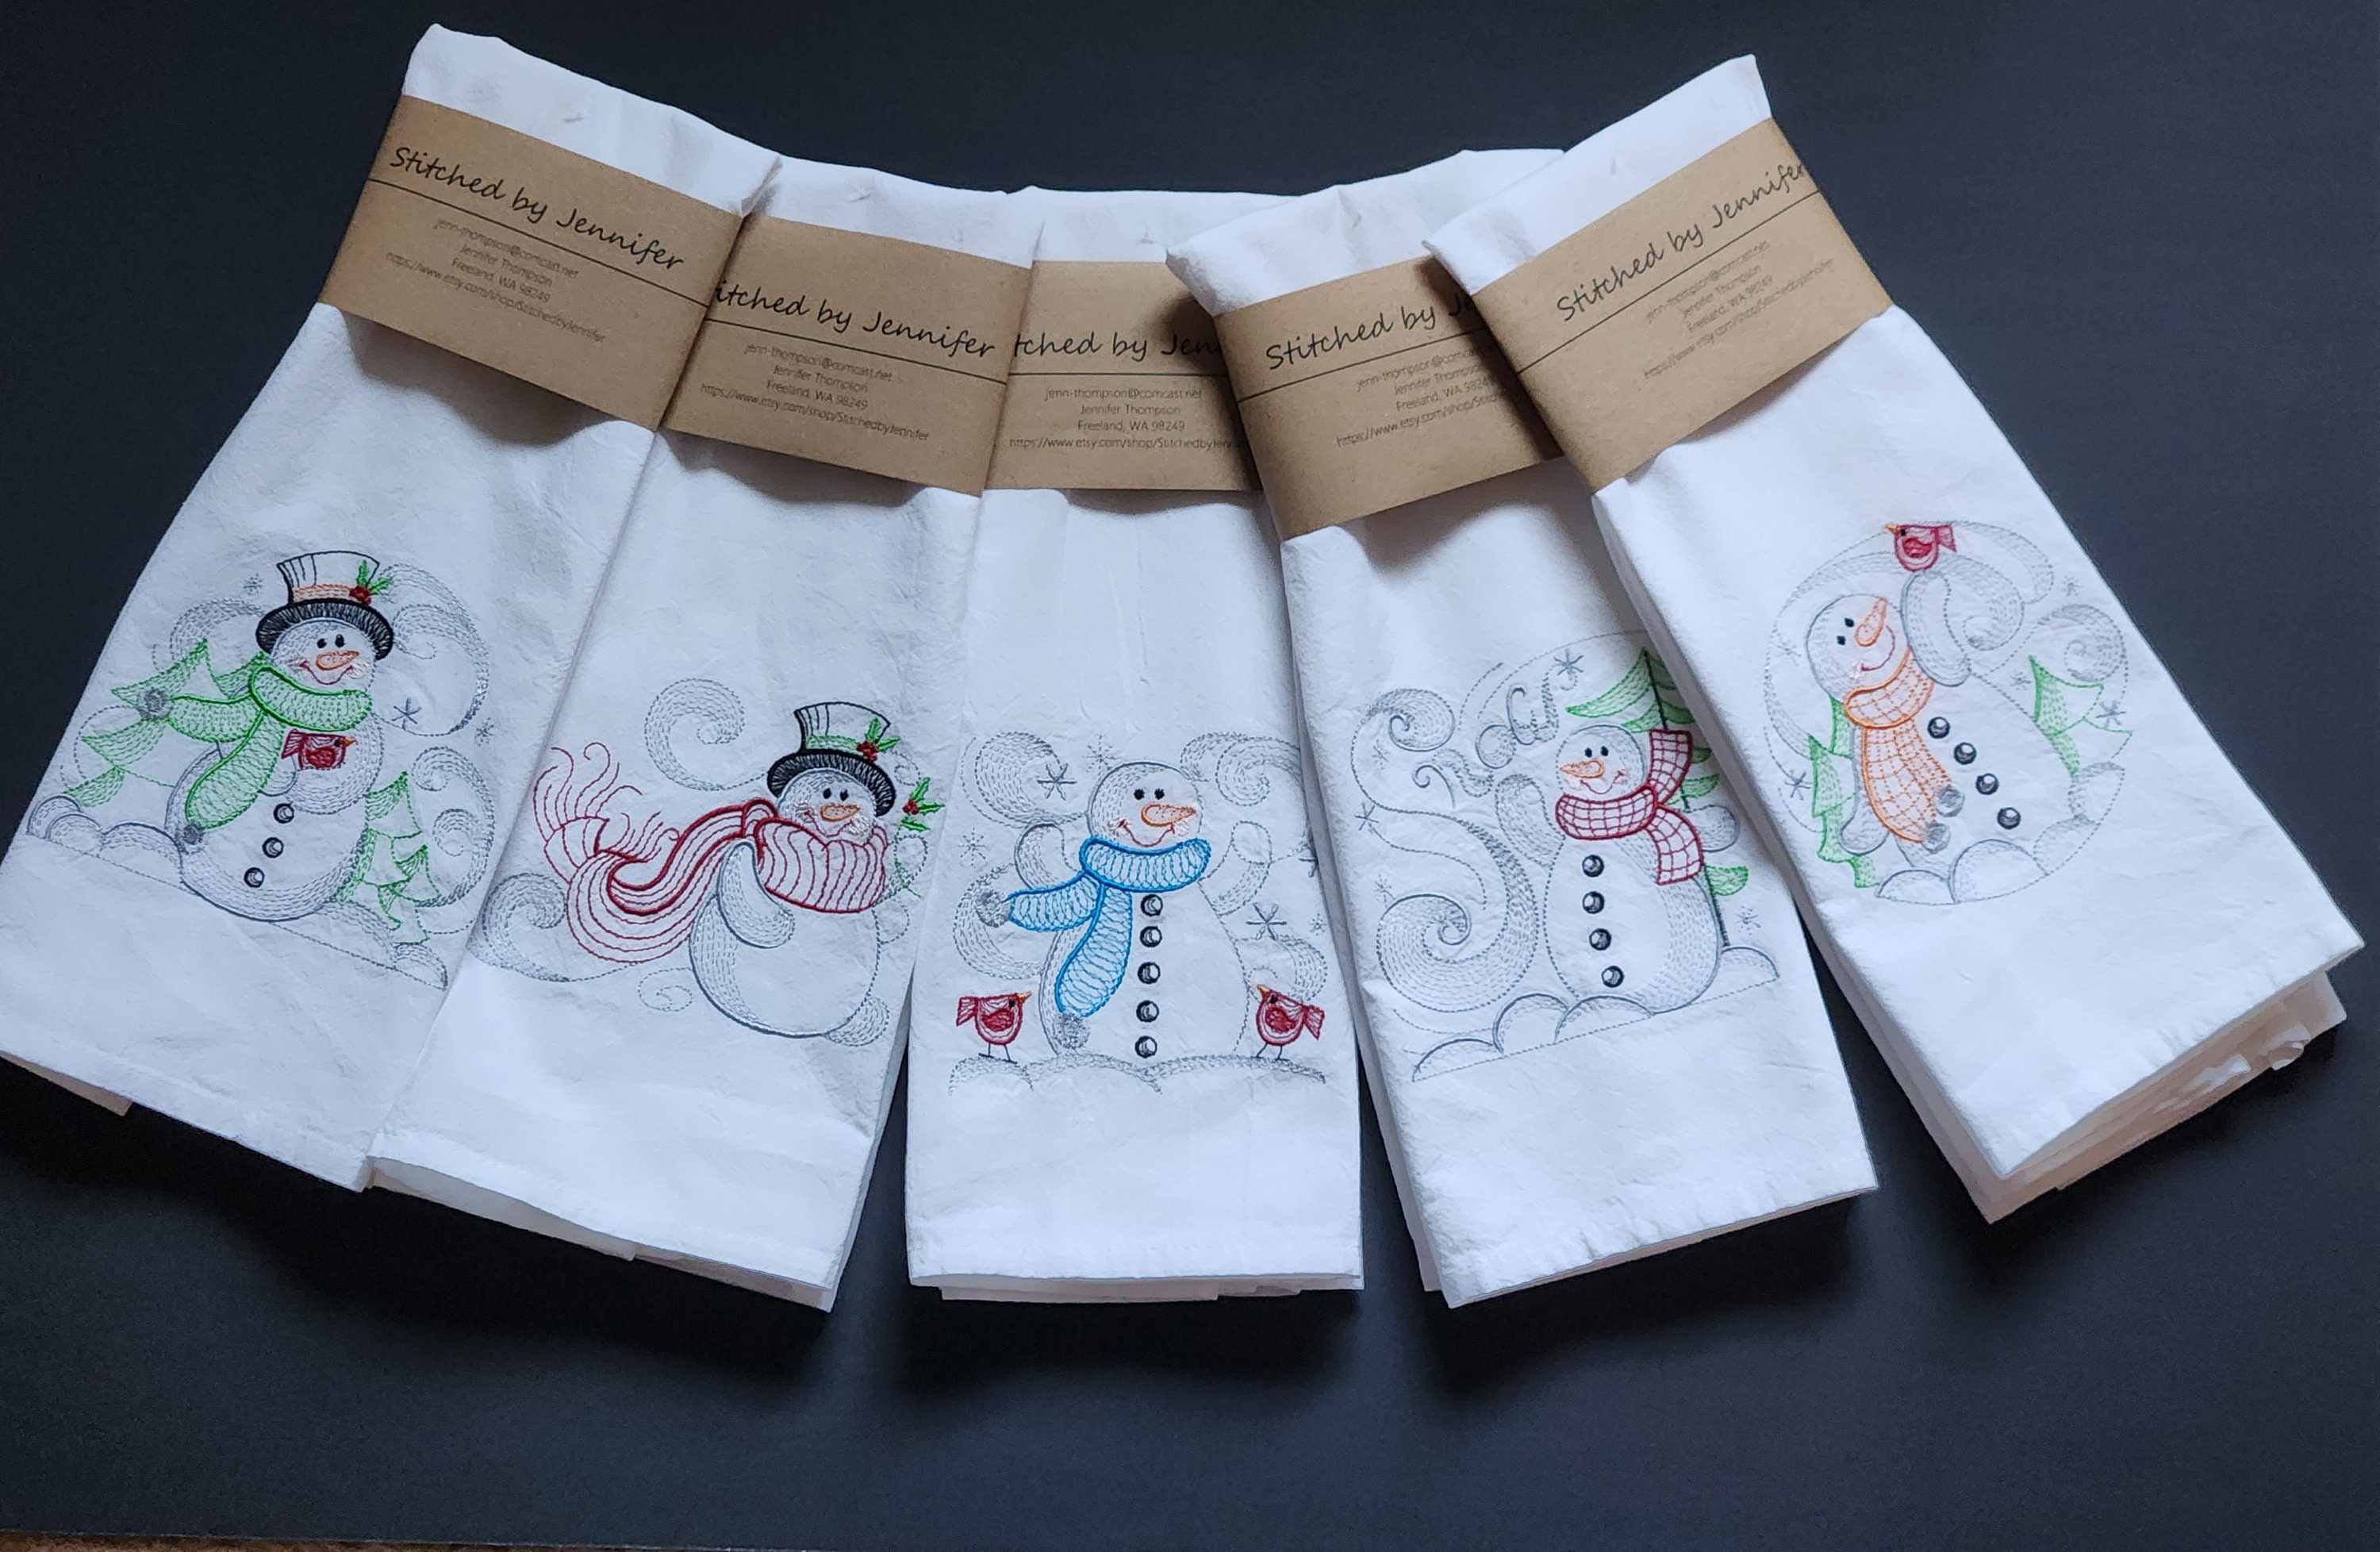 Welcome Friends Snowman – Kitchen Tea Towel